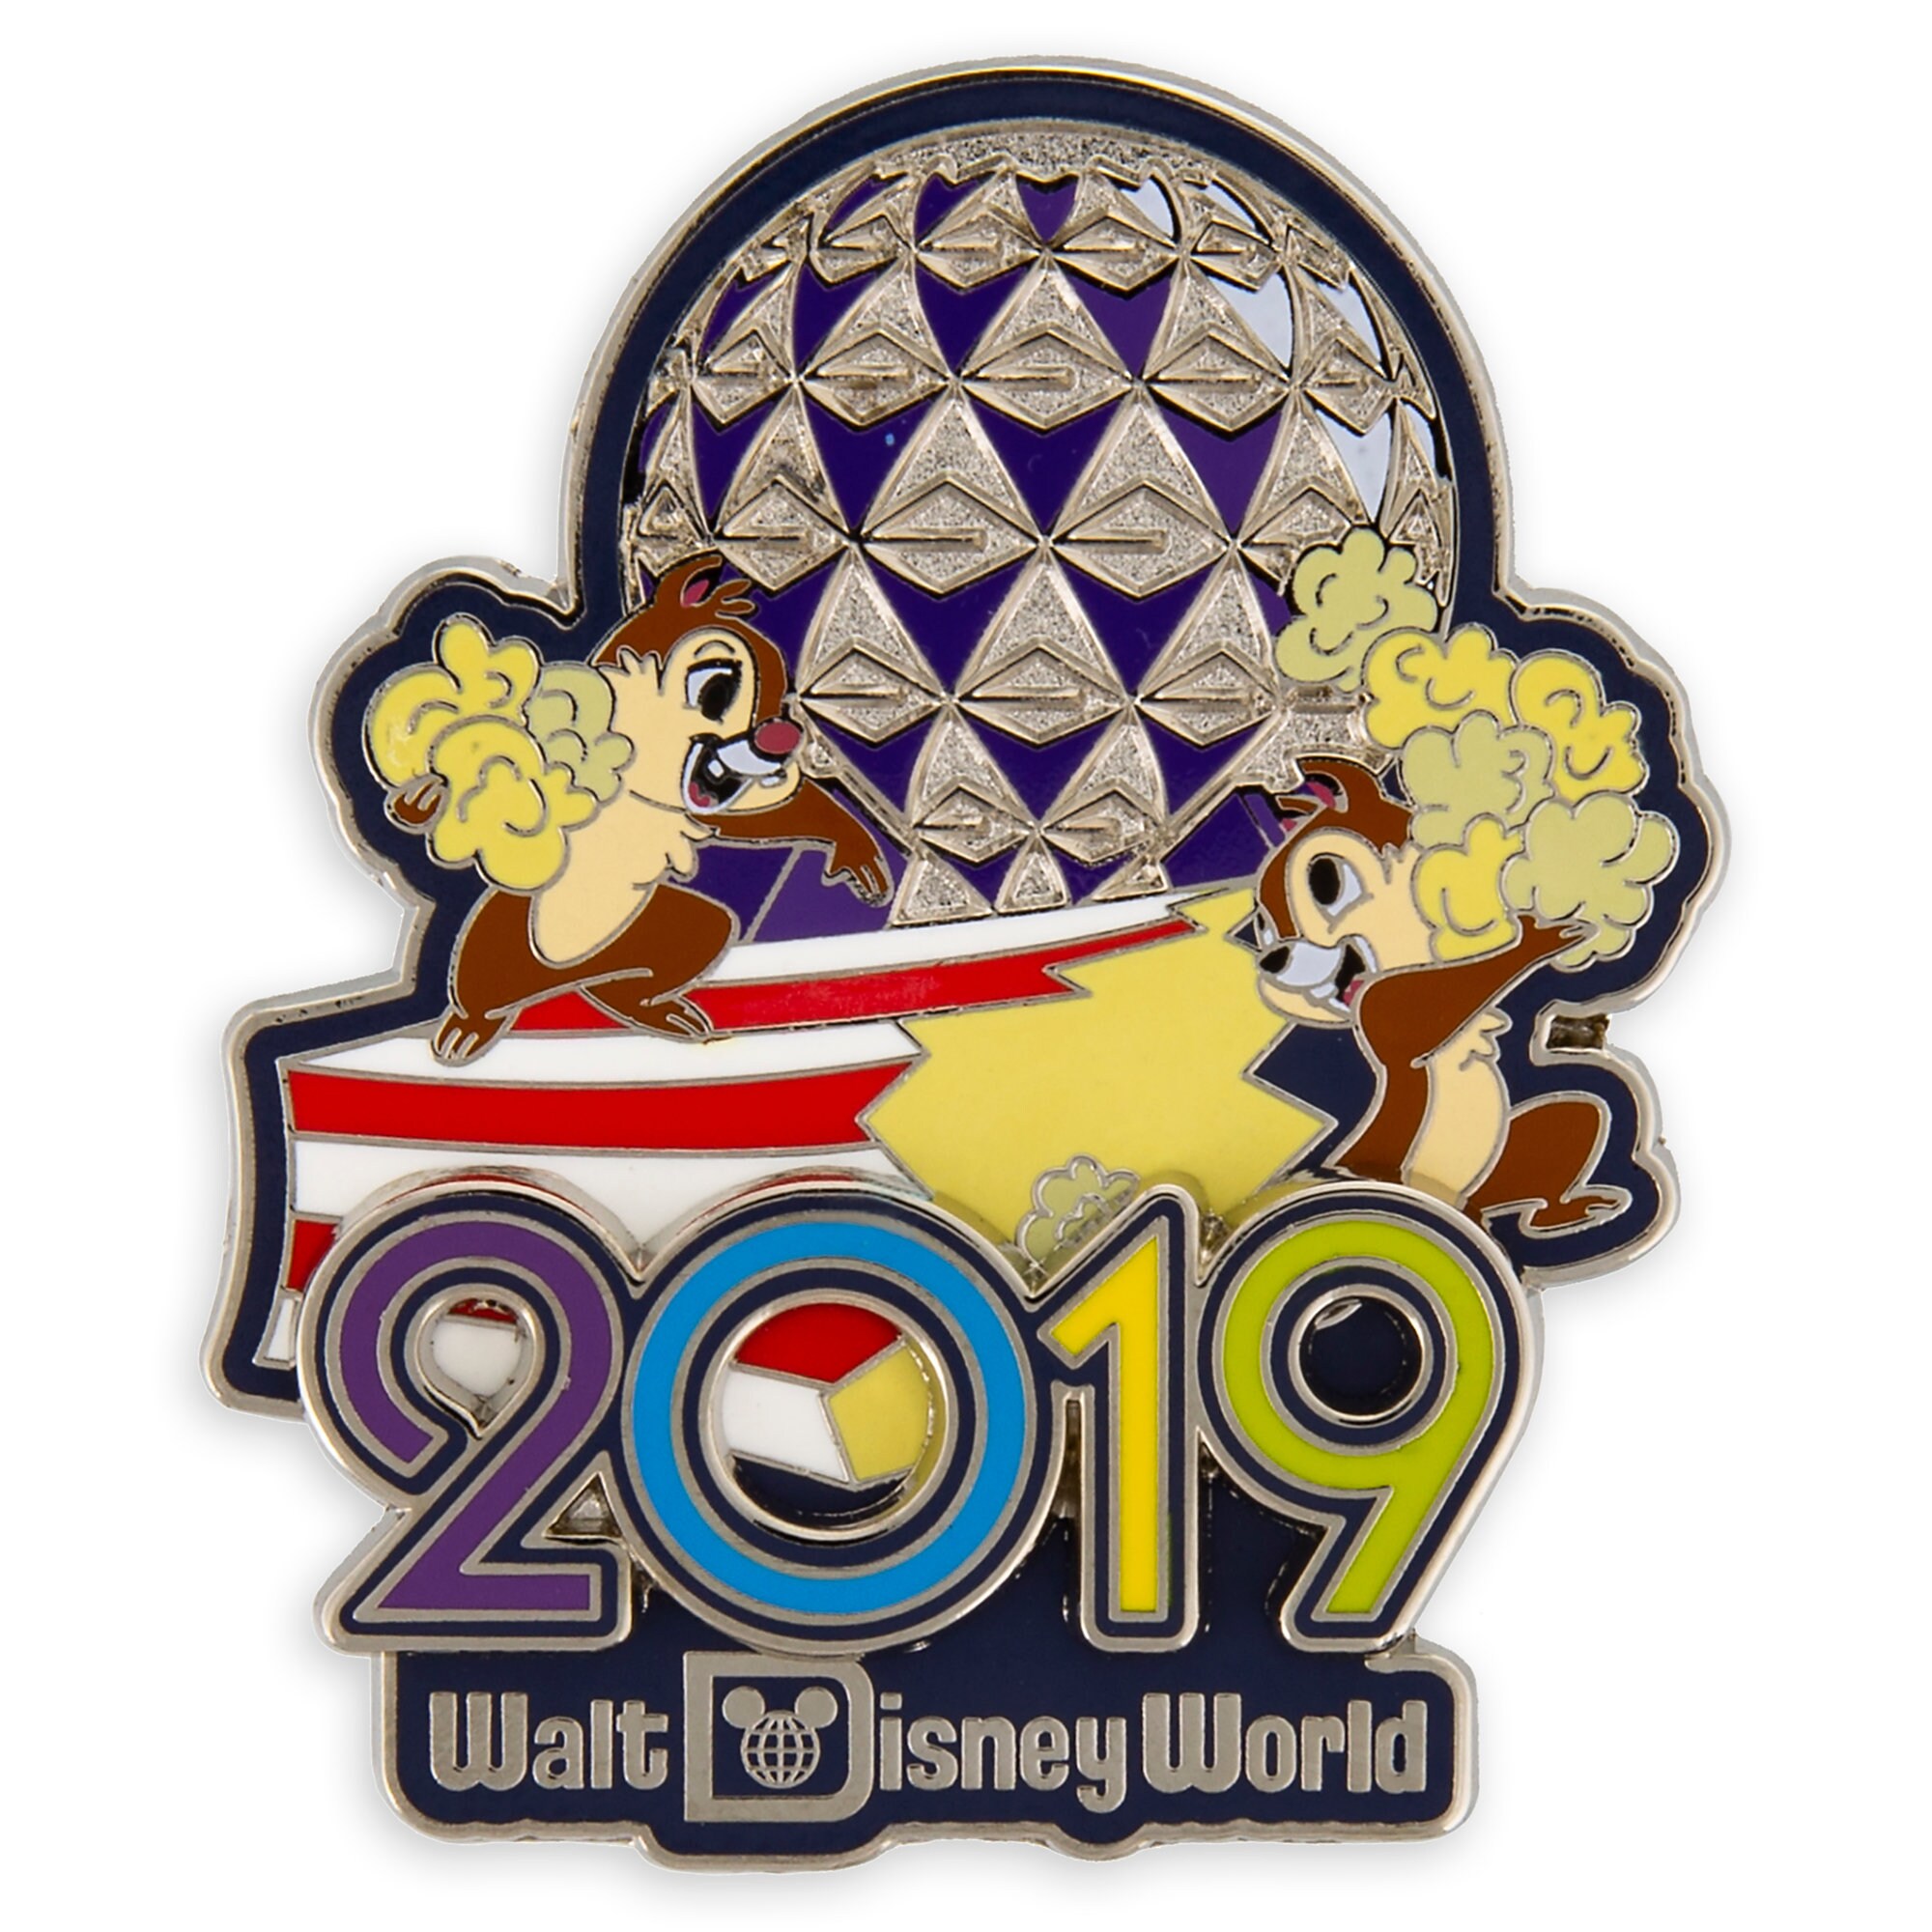 Chip 'n Dale Walt Disney World Pin - 2019